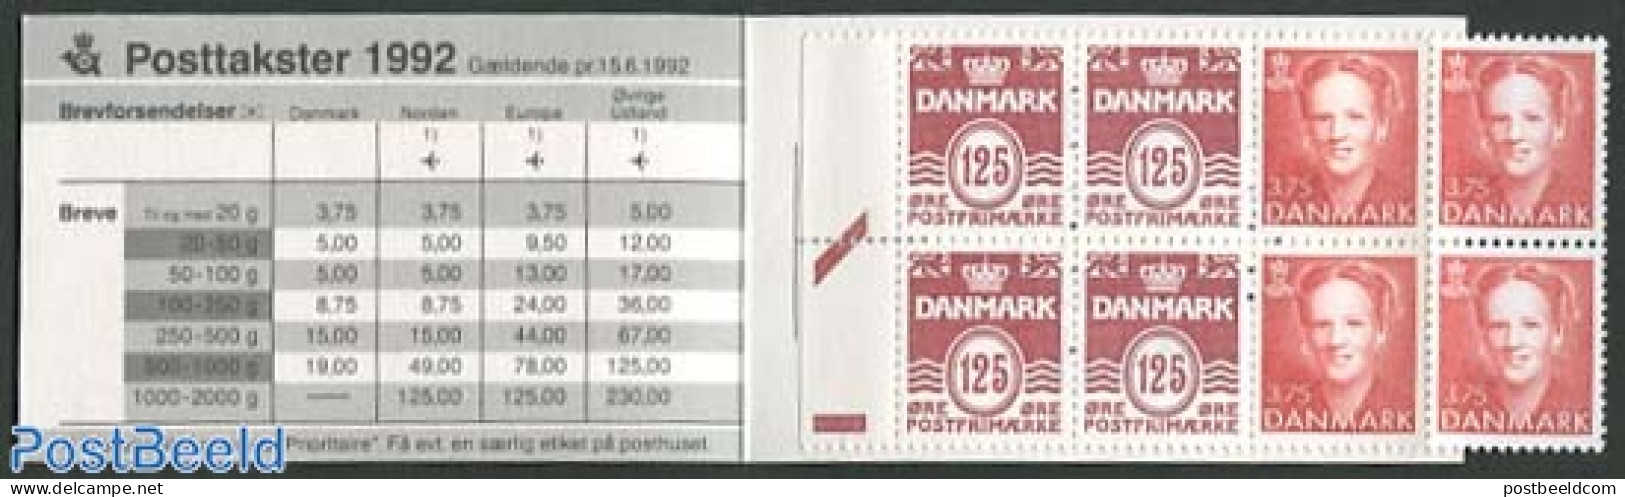 Denmark 1992 Definitives Booklet (H37 On Cover), Mint NH, Stamp Booklets - Unused Stamps